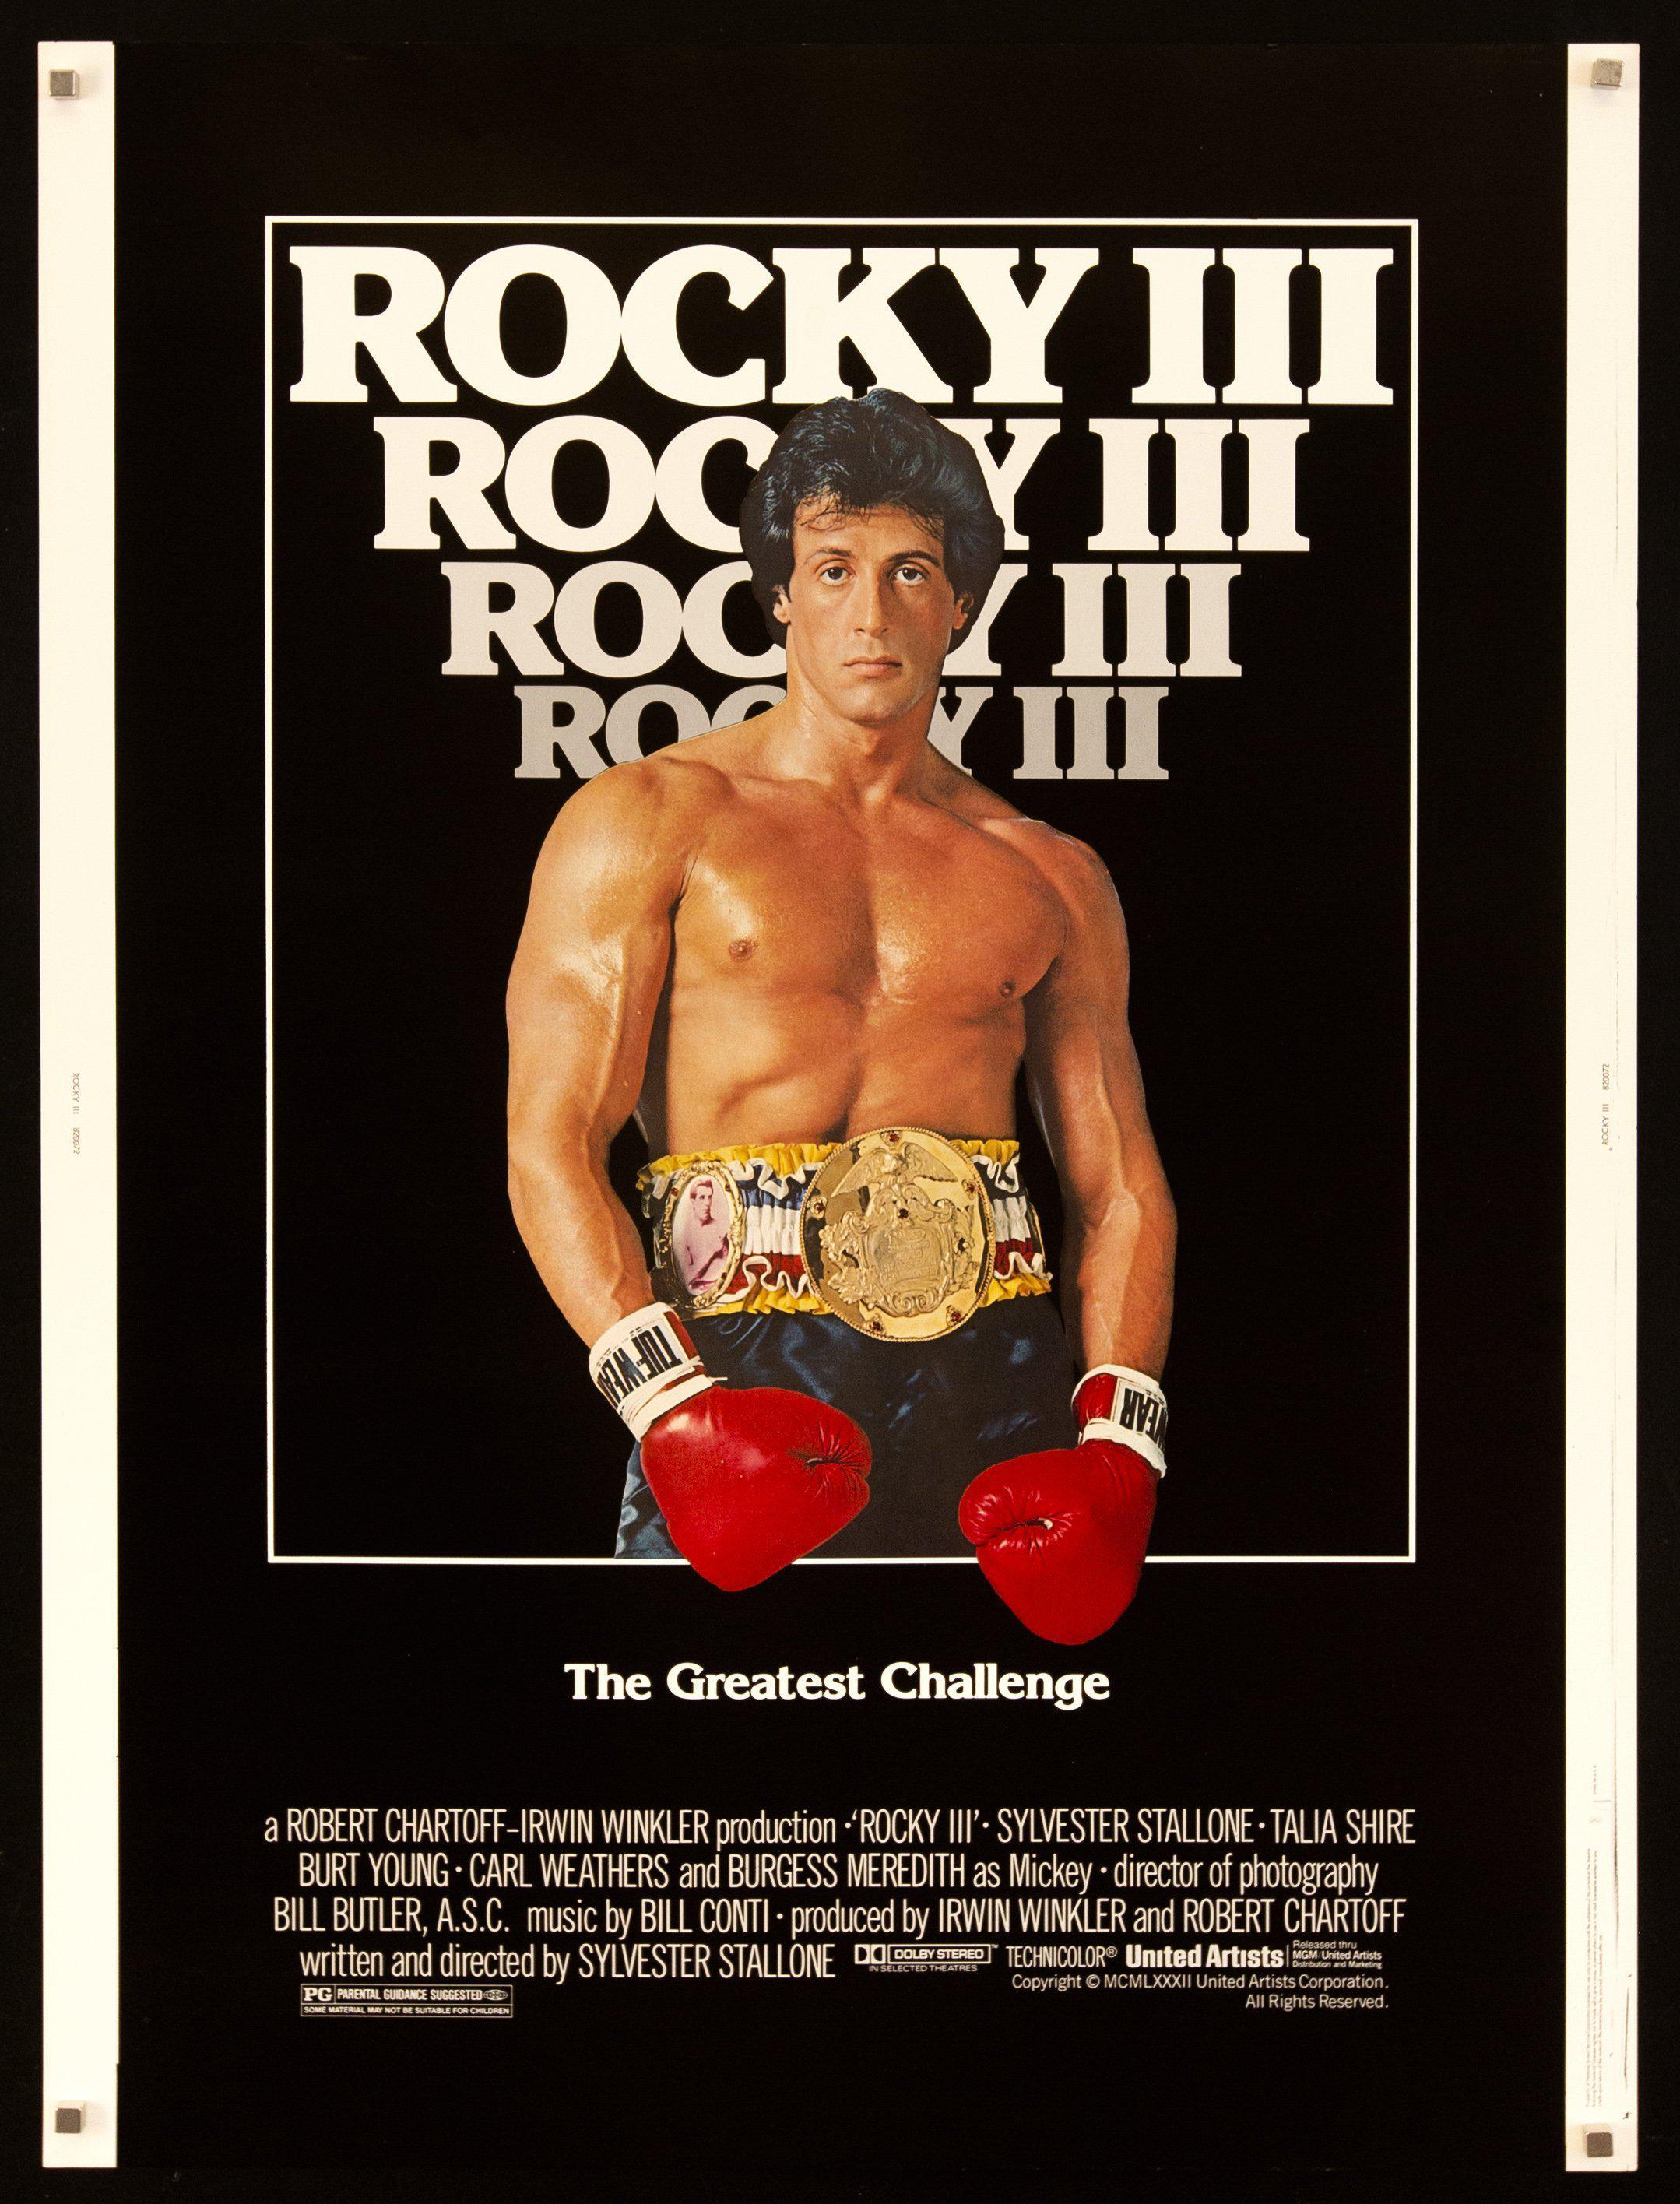 rocky movie posters